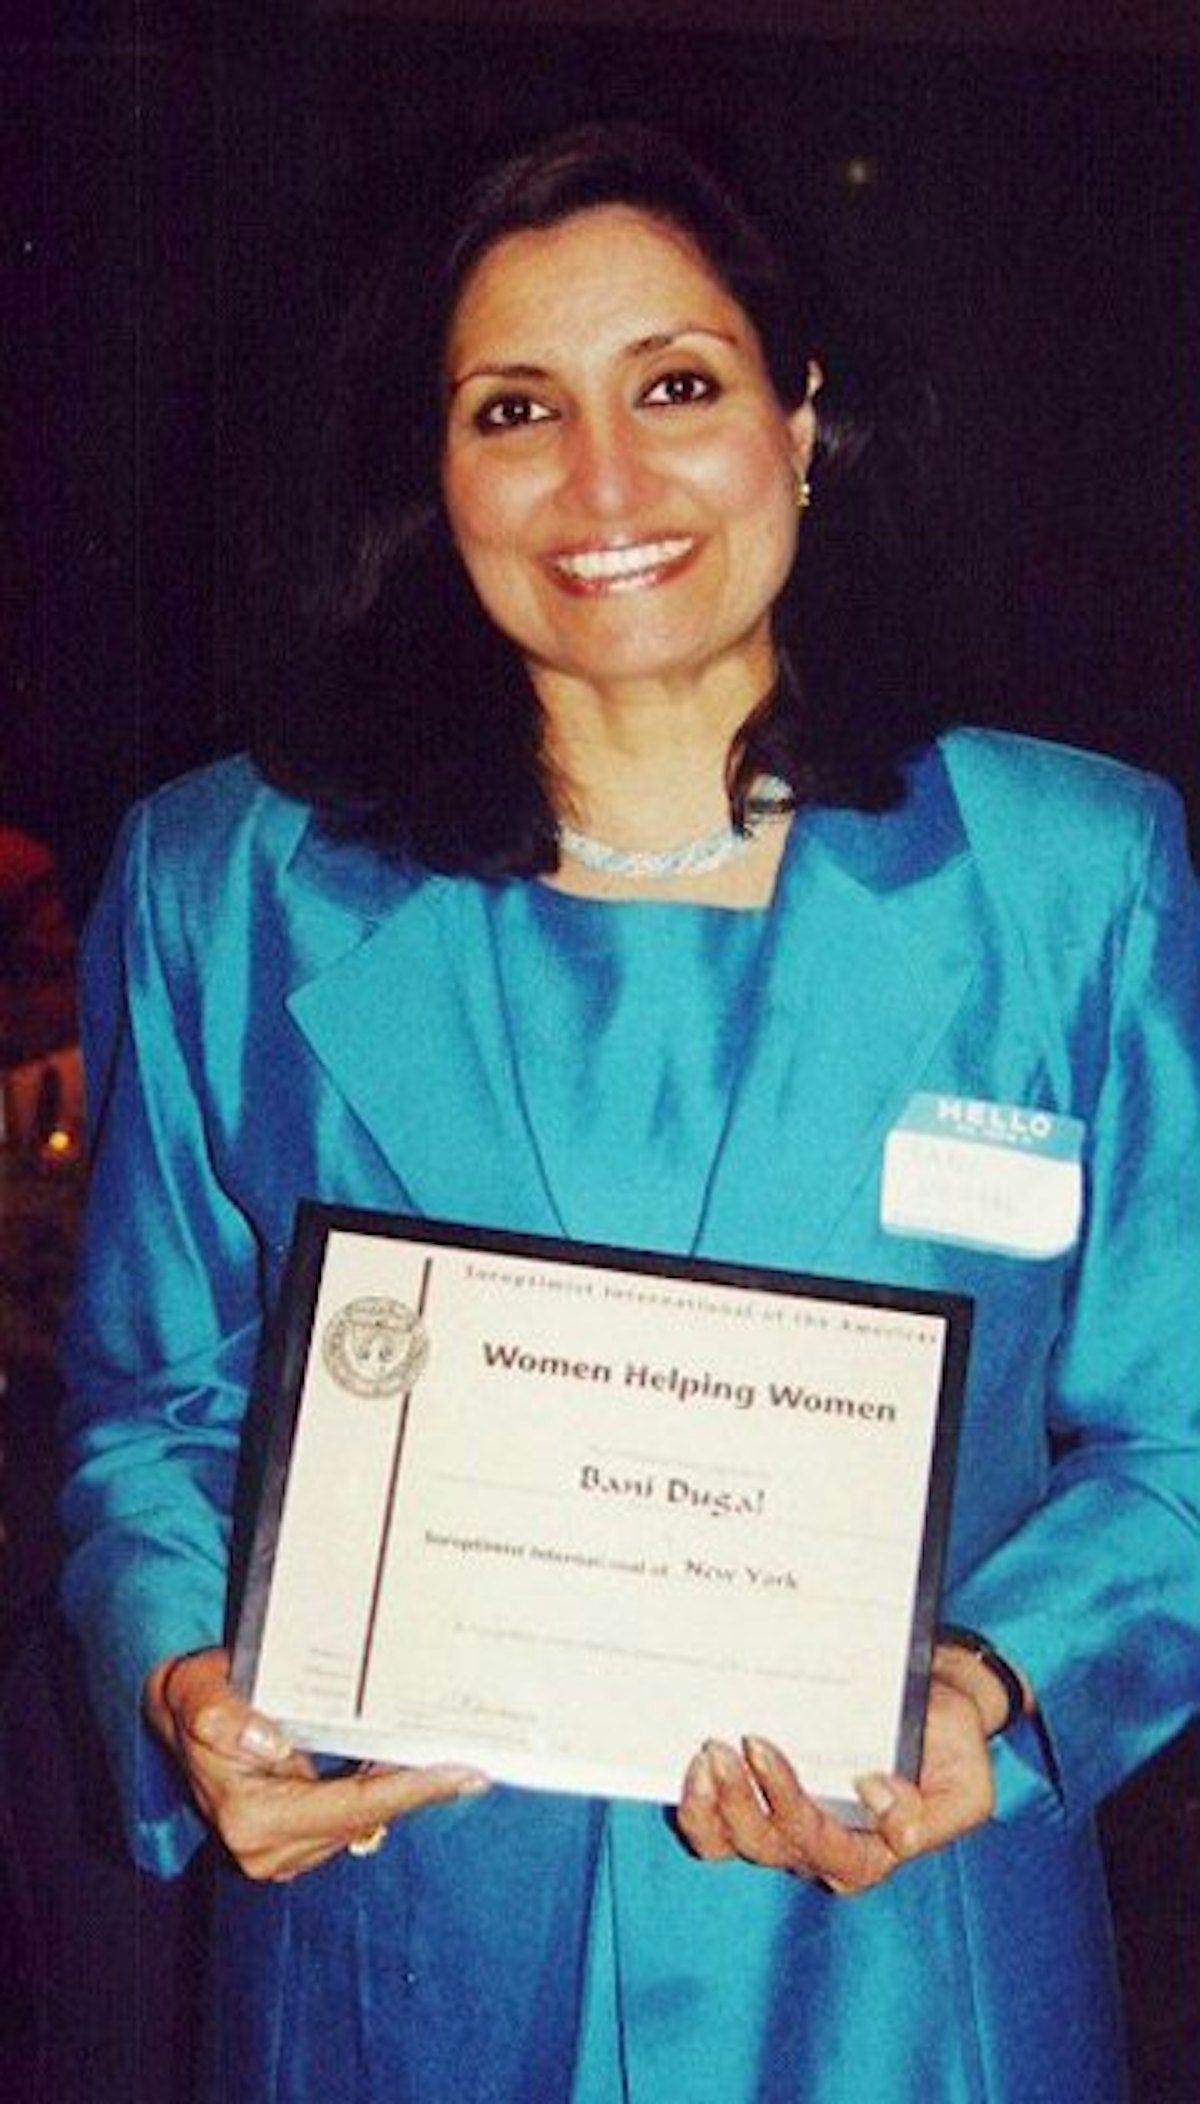 Bani Dugal with her award.